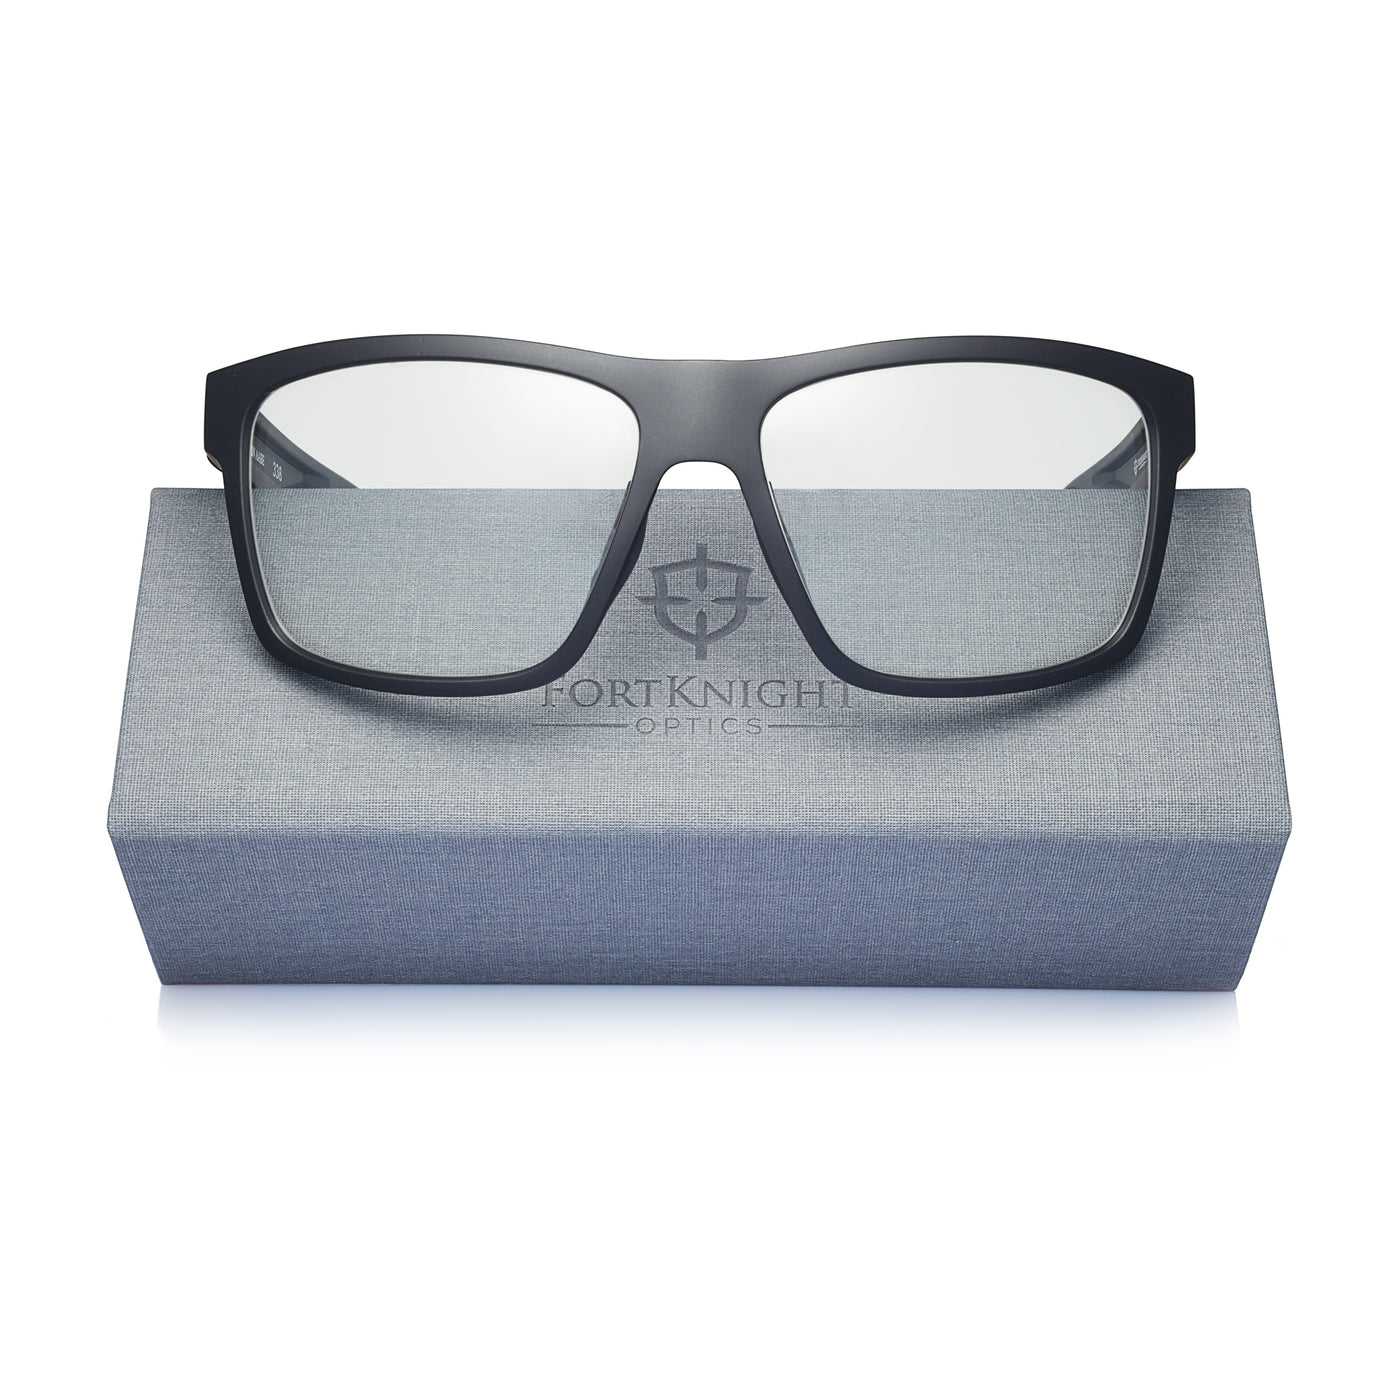 FortKnight Optics 338 Ballistic Premium Shooting Glasses - World's best premium shooting eyewear featuring lenses by ZEISS